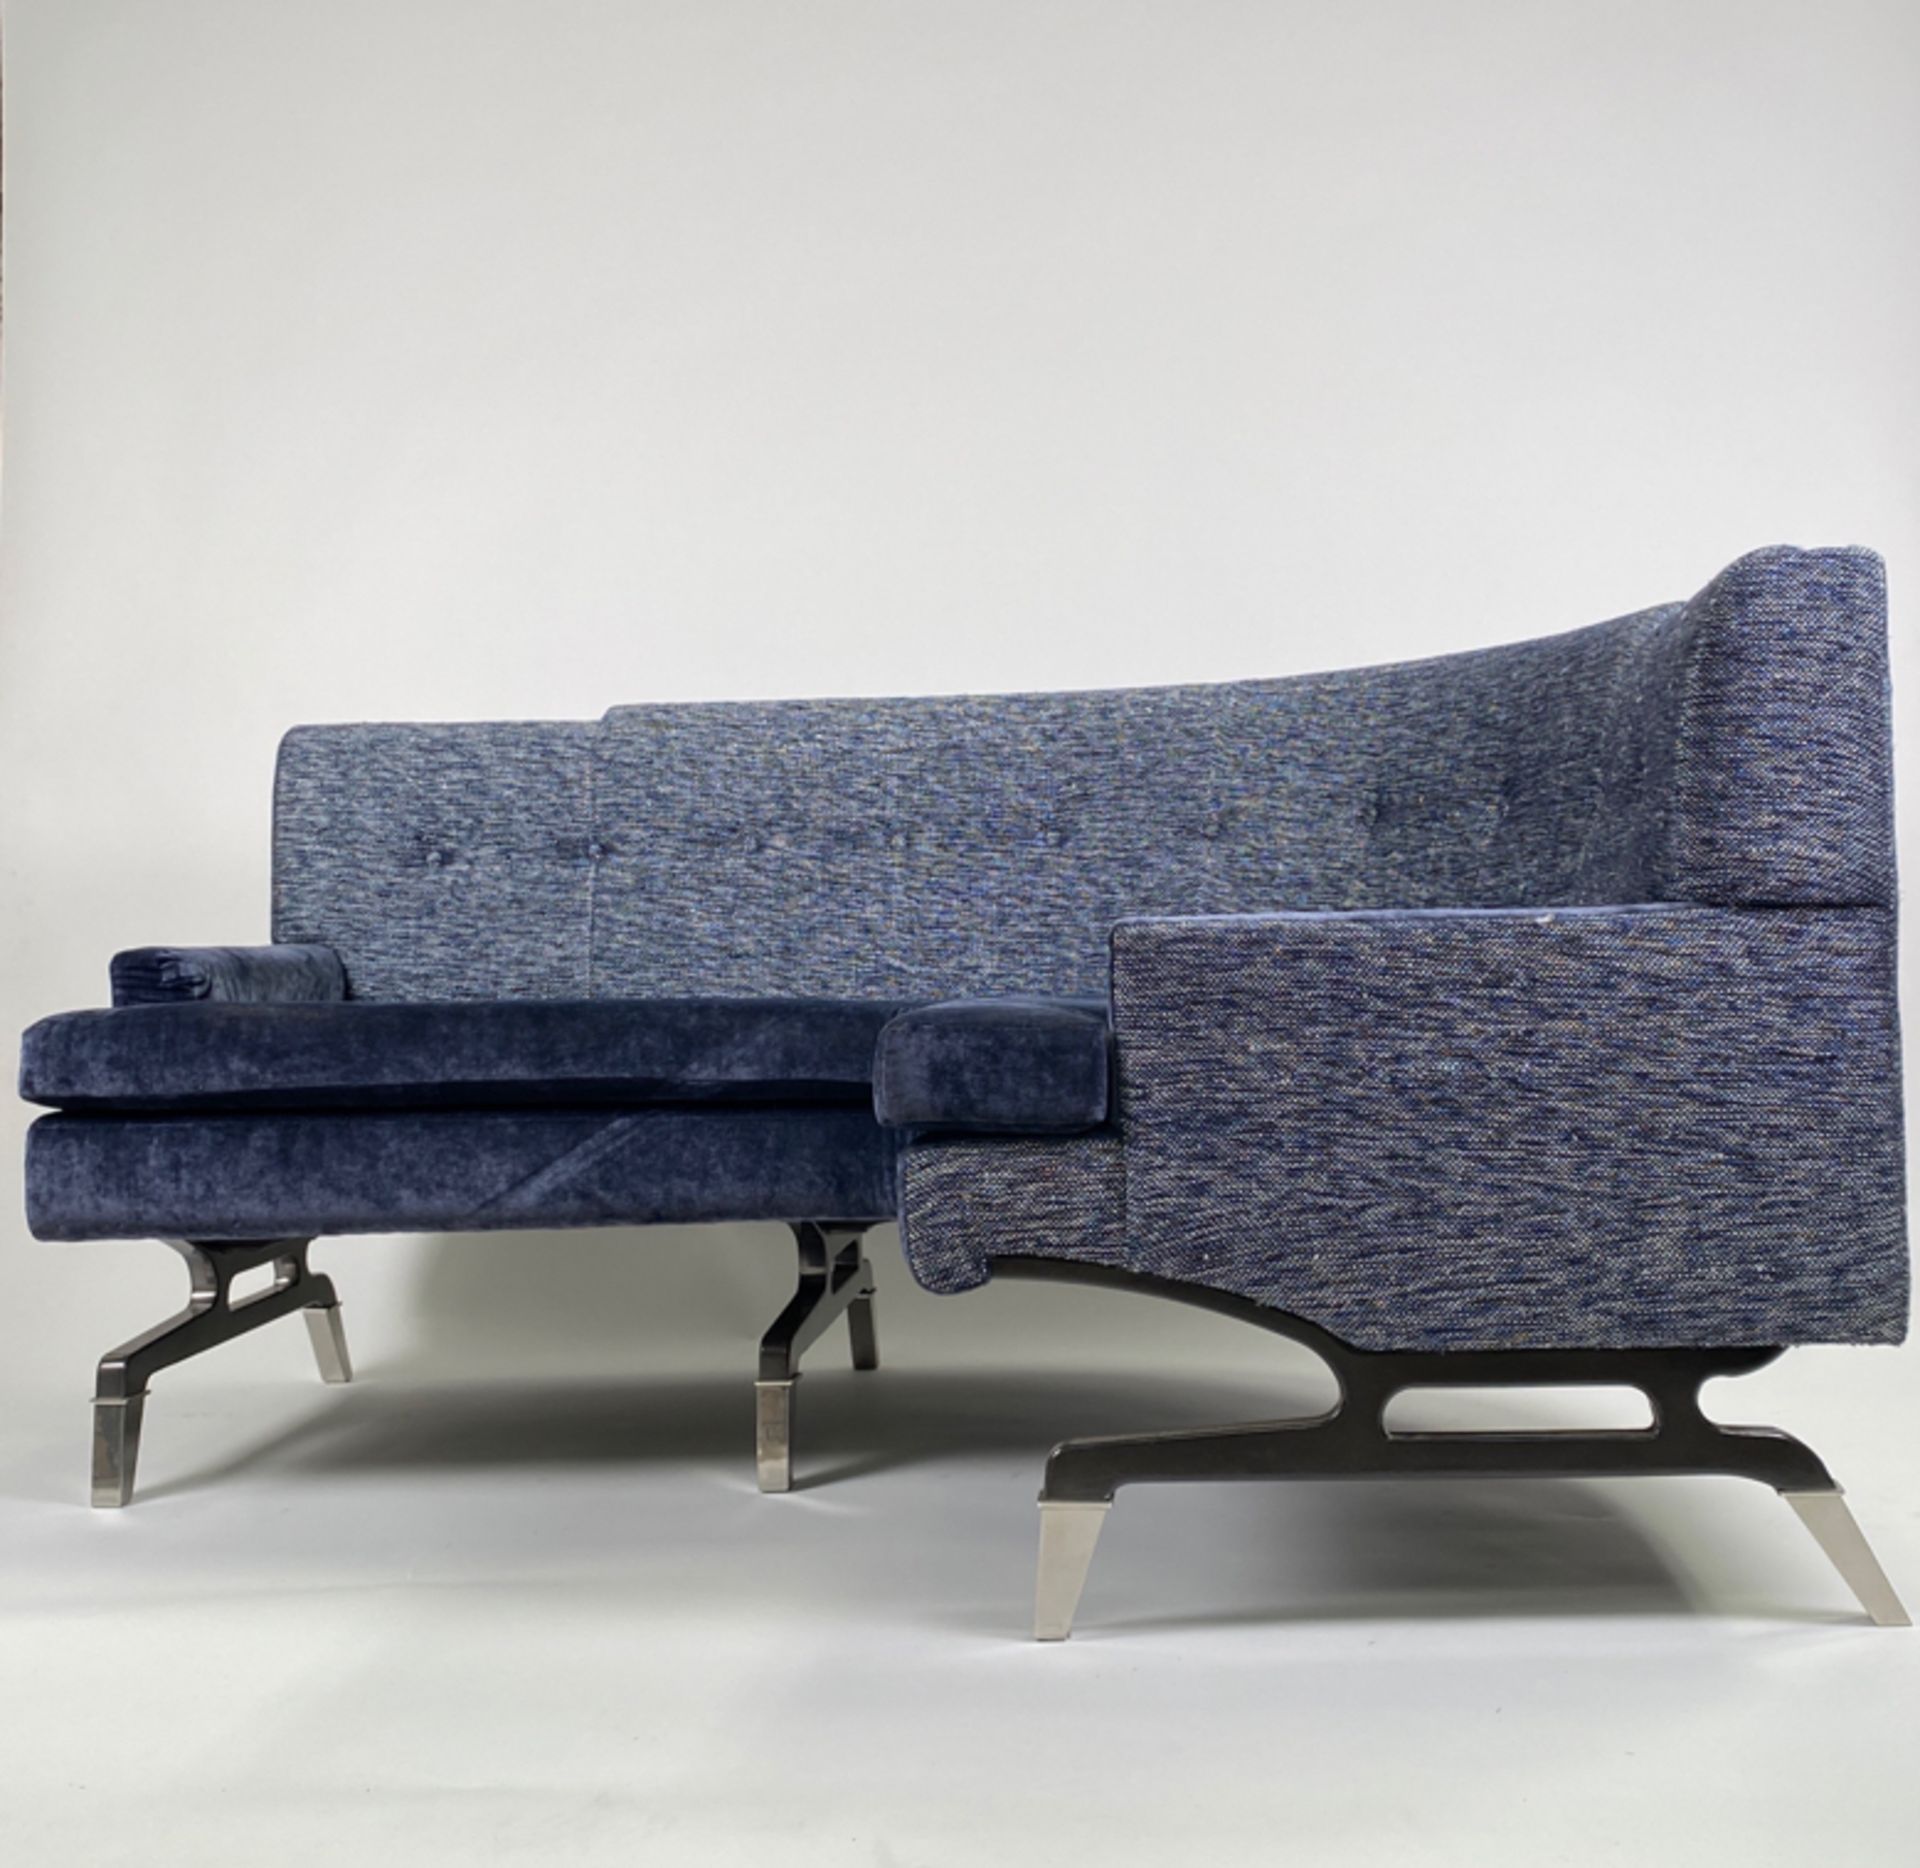 Bespoke Ben Whistler Sofa Made for The Berkeley Blue Bar - Image 3 of 11